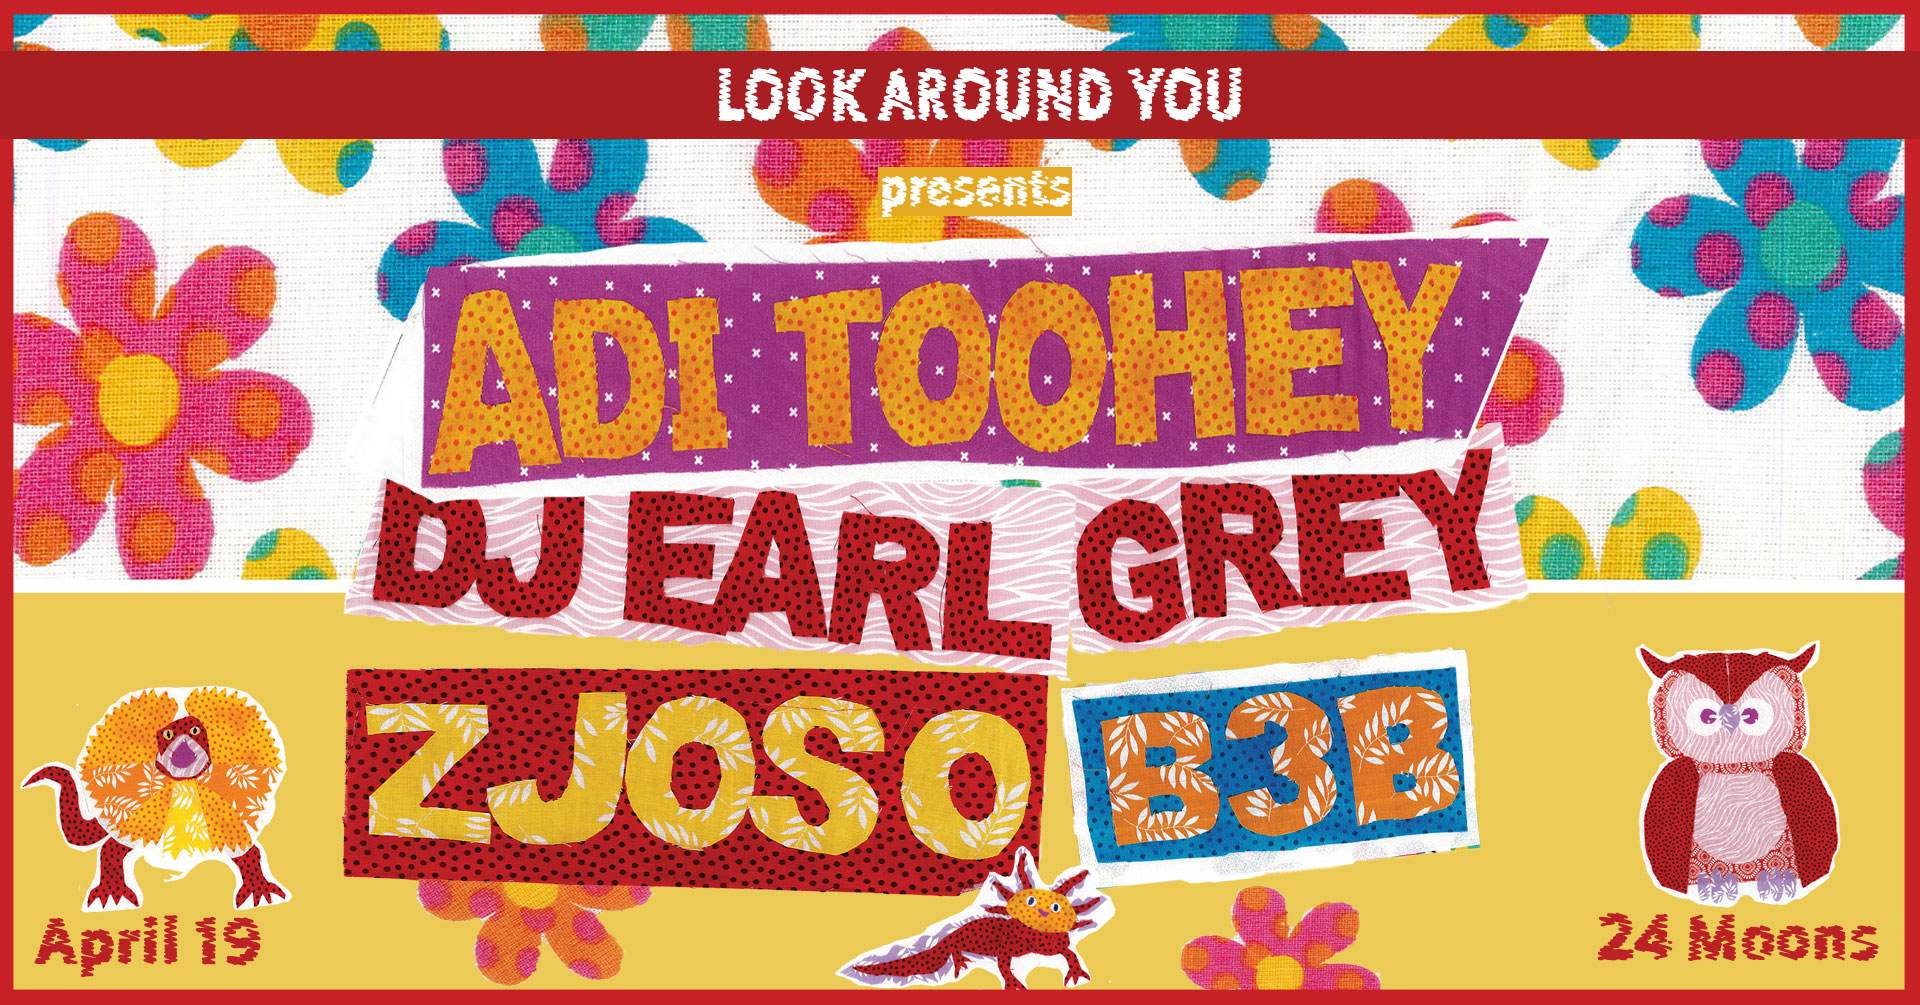 Look Around You presents: Adi Toohey, DJ Earl Grey, Zjoso b3b All Night Long - Página frontal